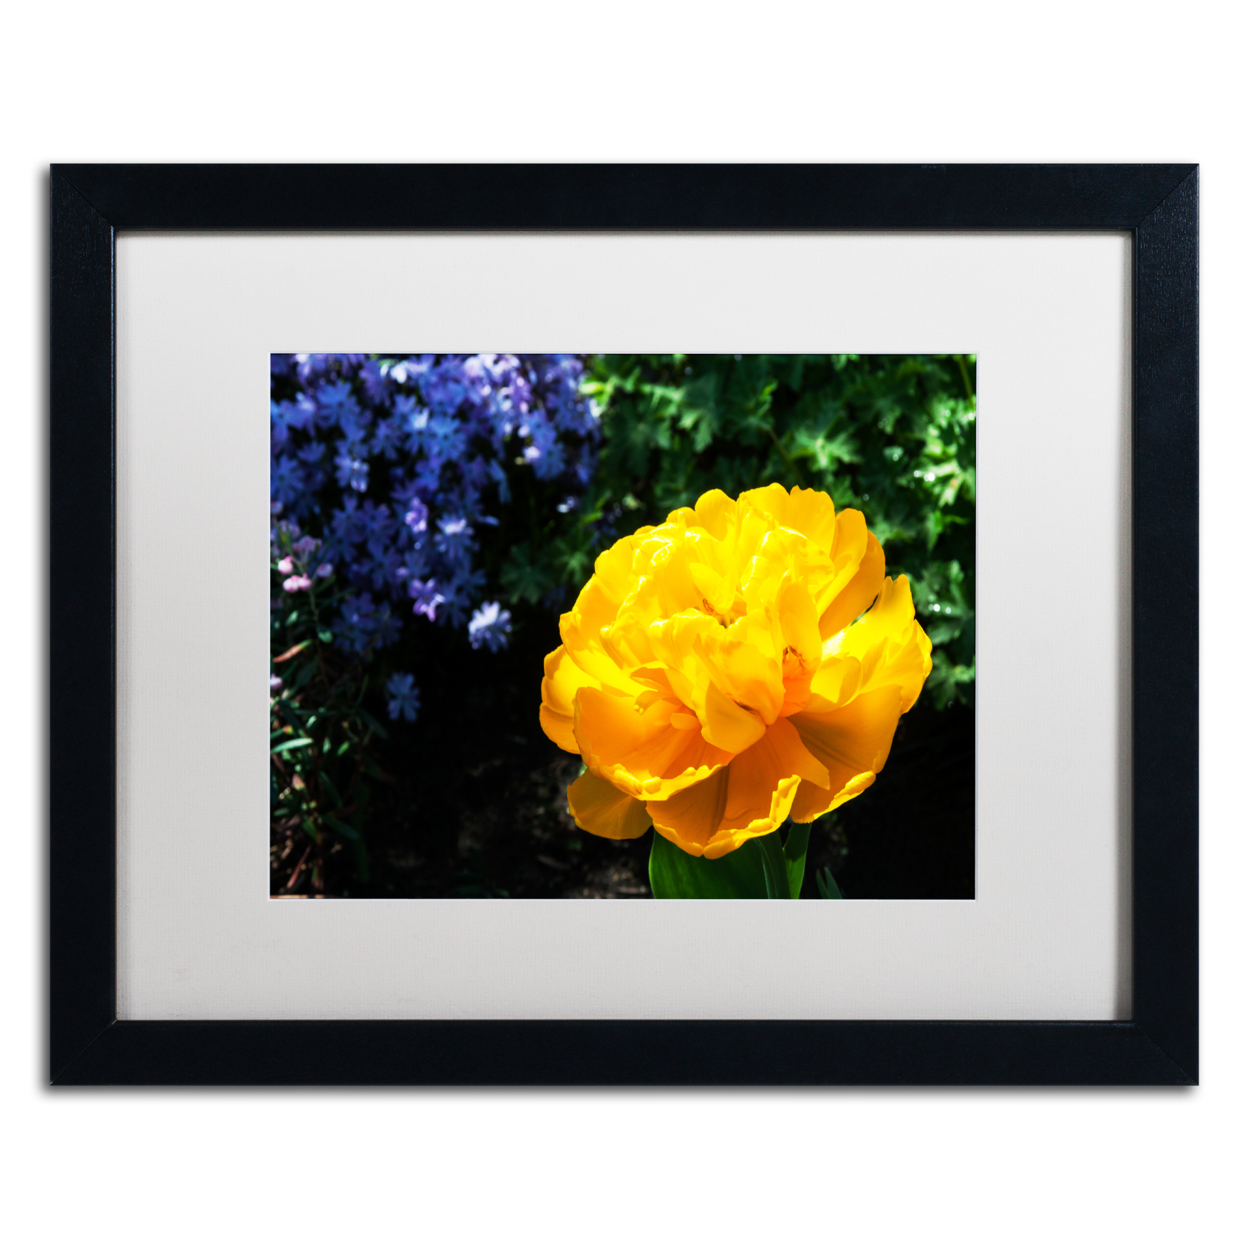 Kurt Shaffer 'Yellow Double Headed Tulip' Black Wooden Framed Art 18 X 22 Inches